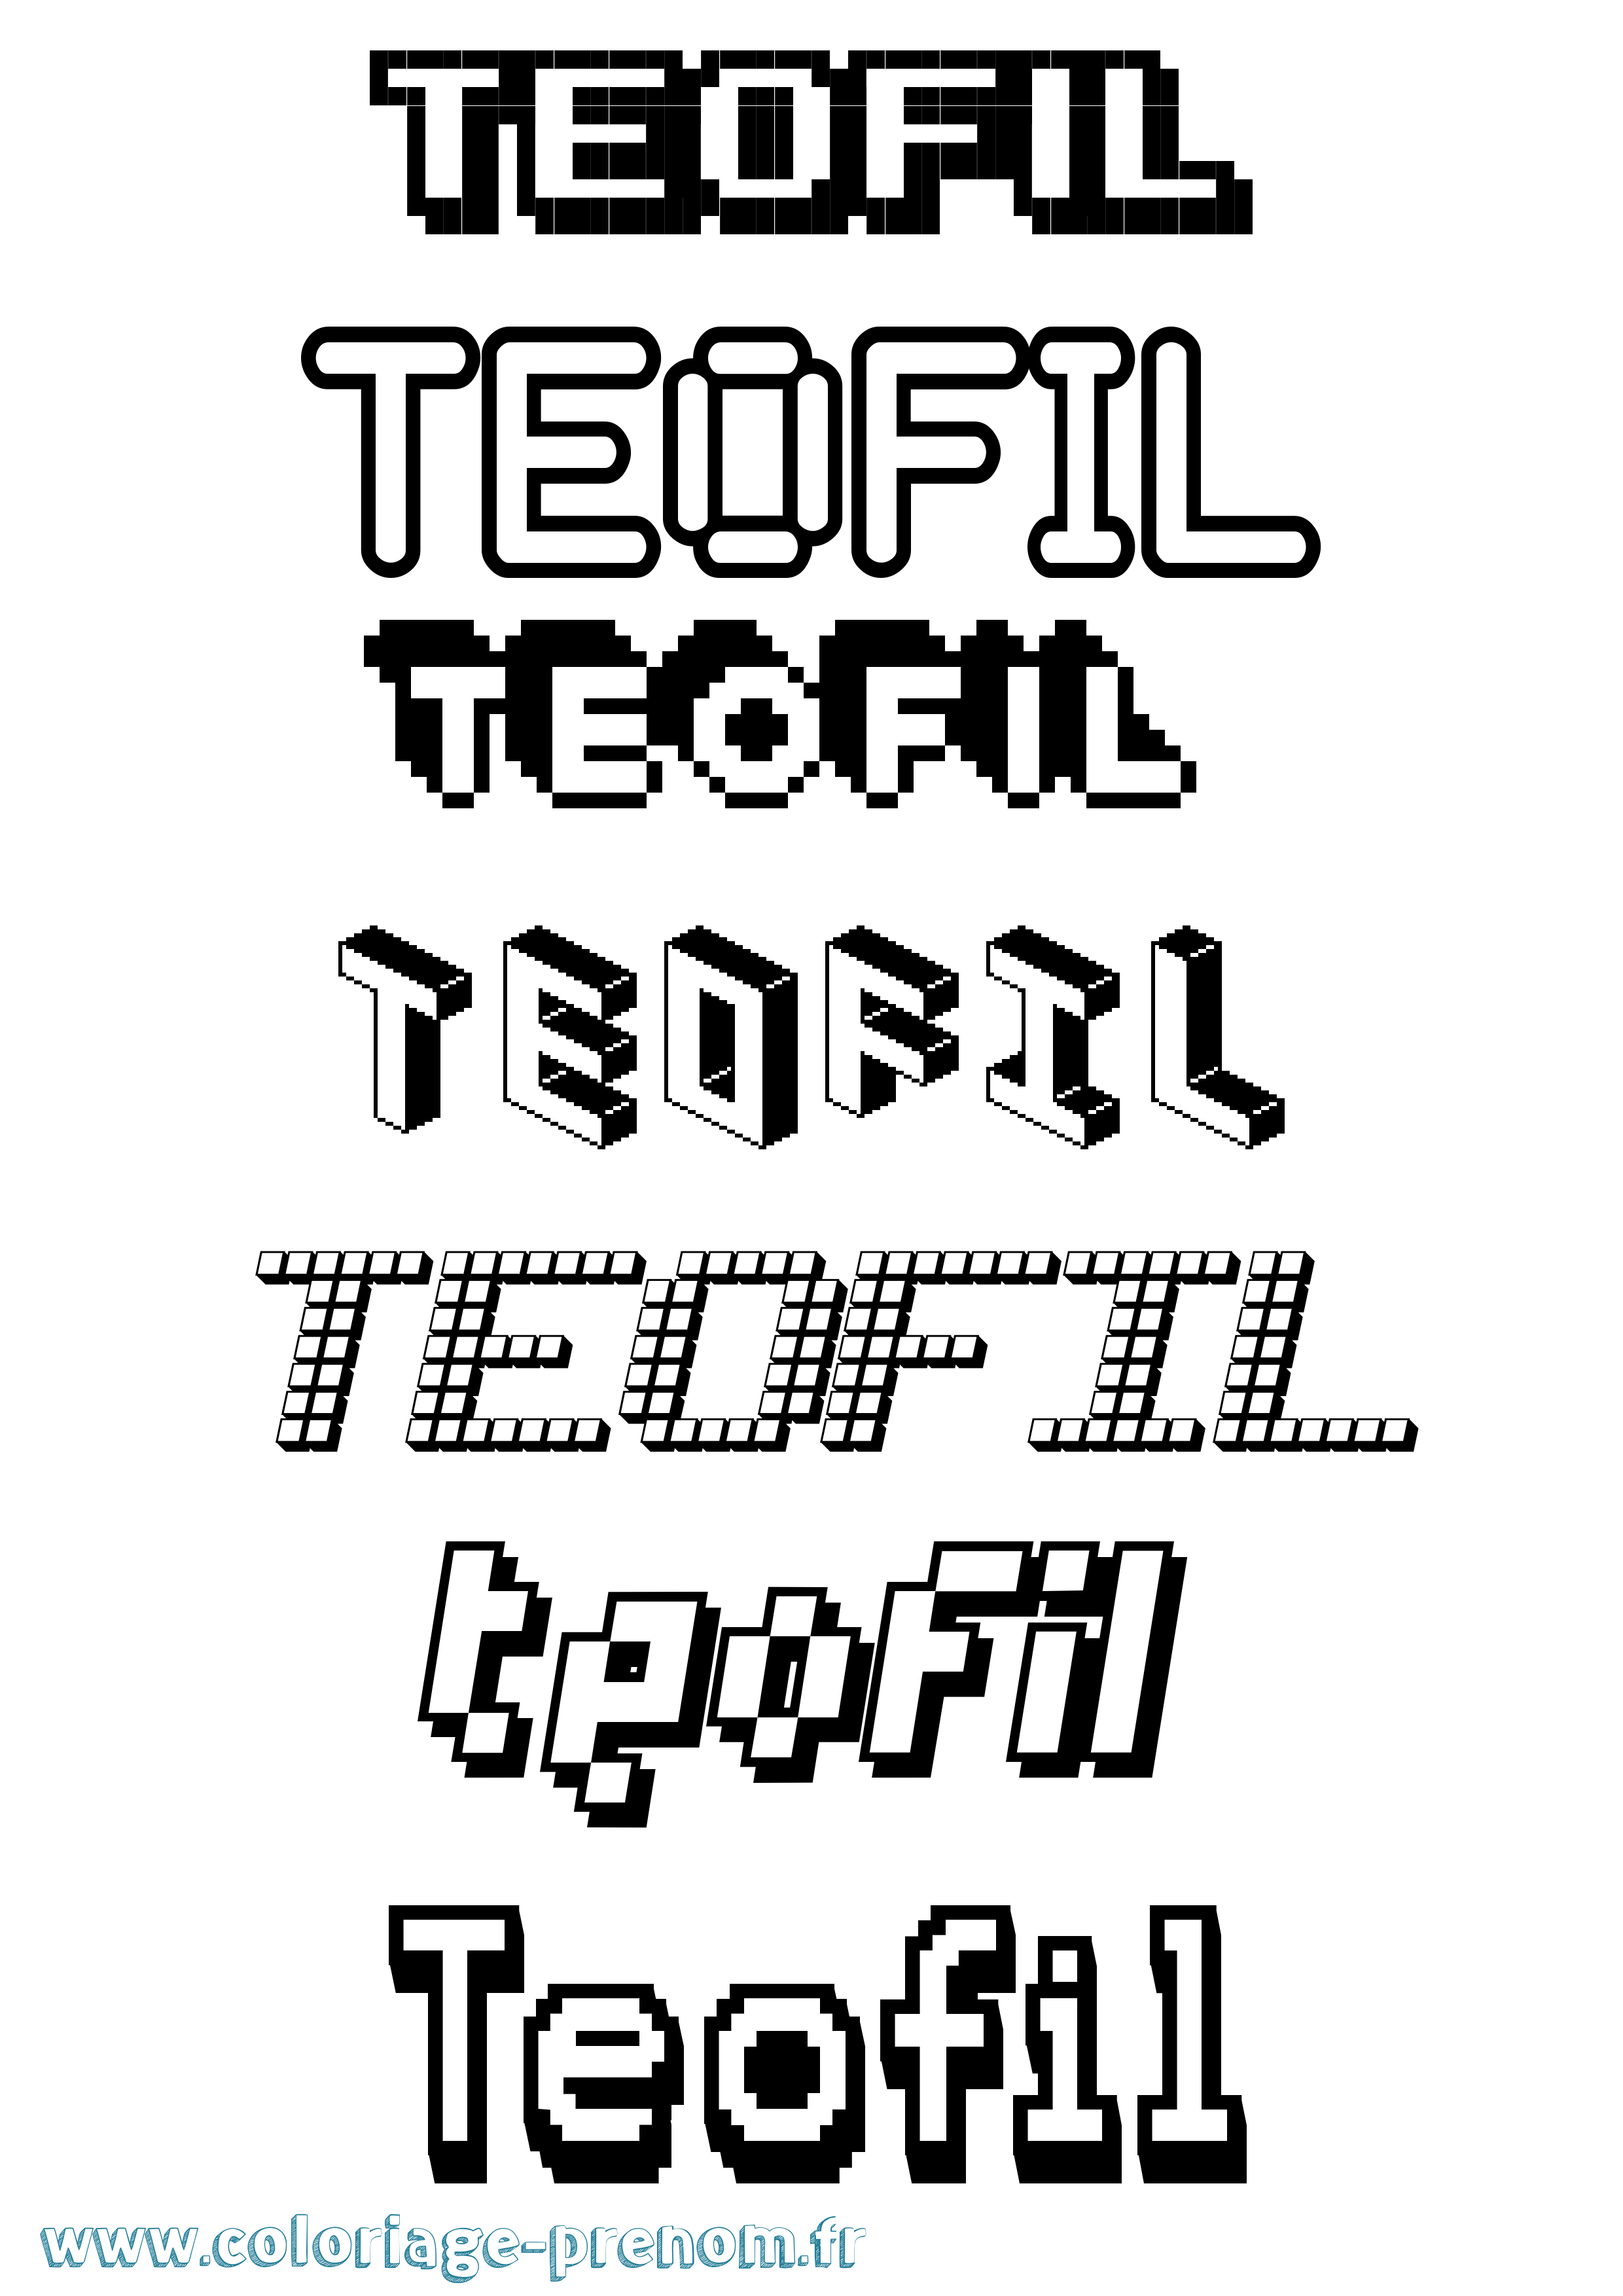 Coloriage prénom Teofil Pixel